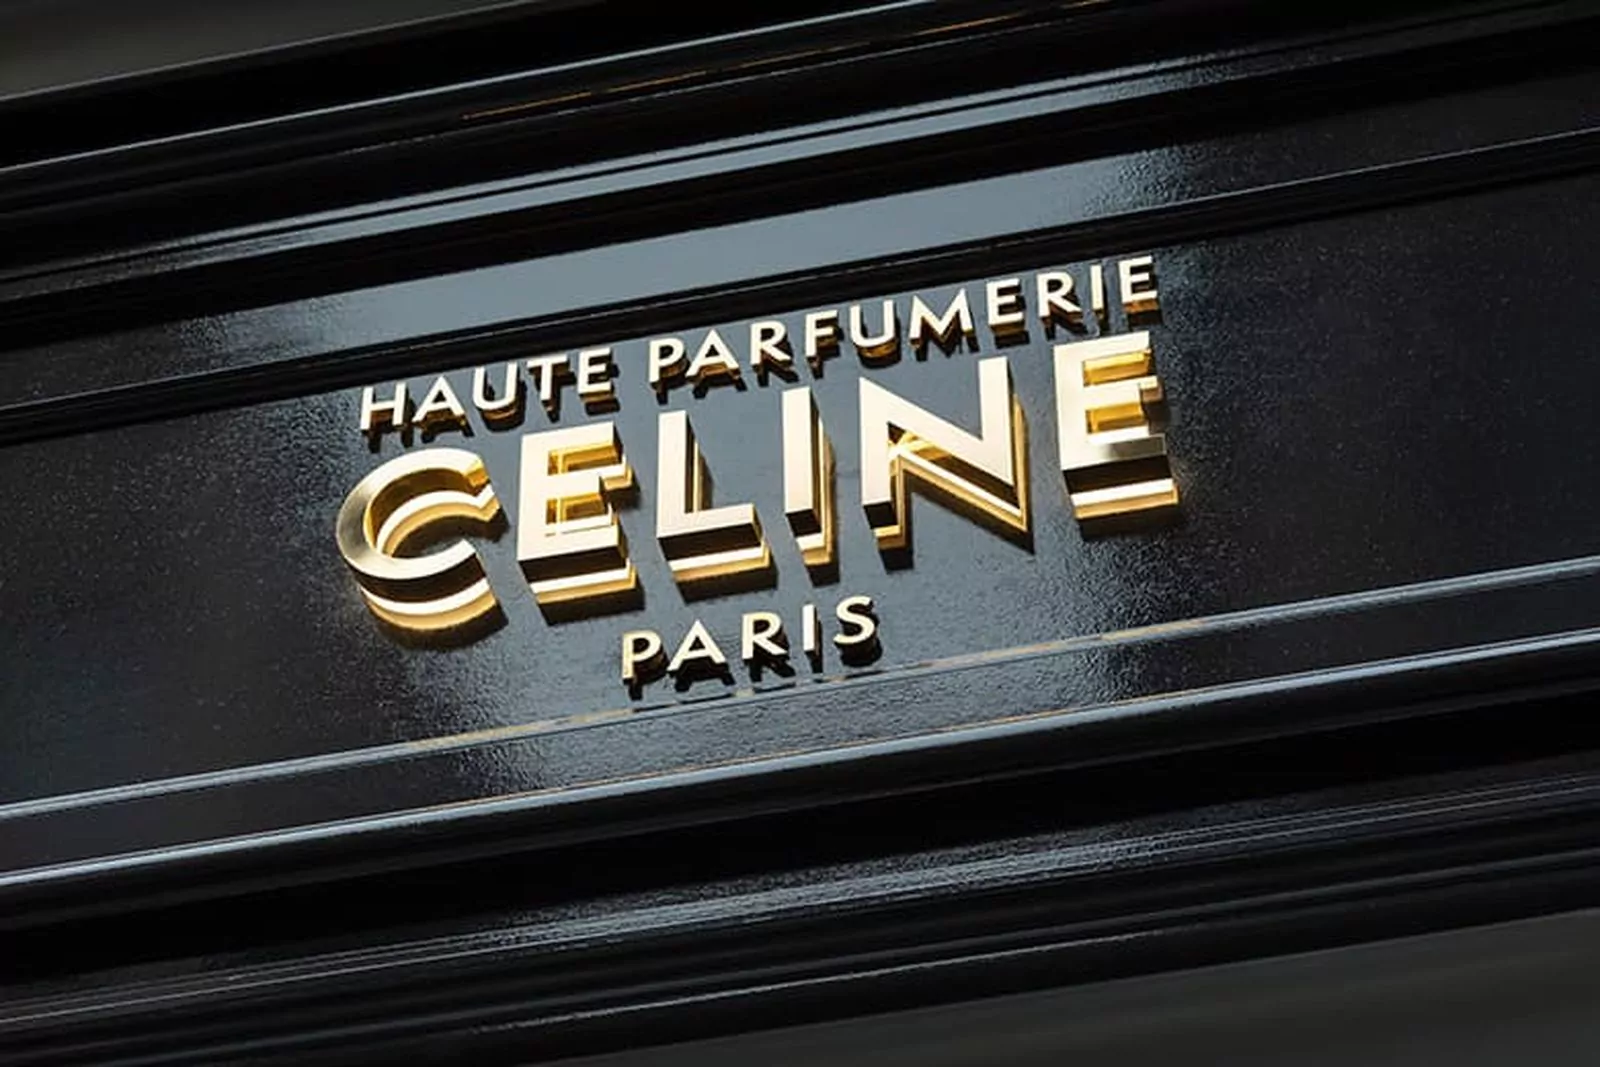 Открытие бутика Celine Haute Parfumerie на парижской улице Saint-Honoré, фото 4